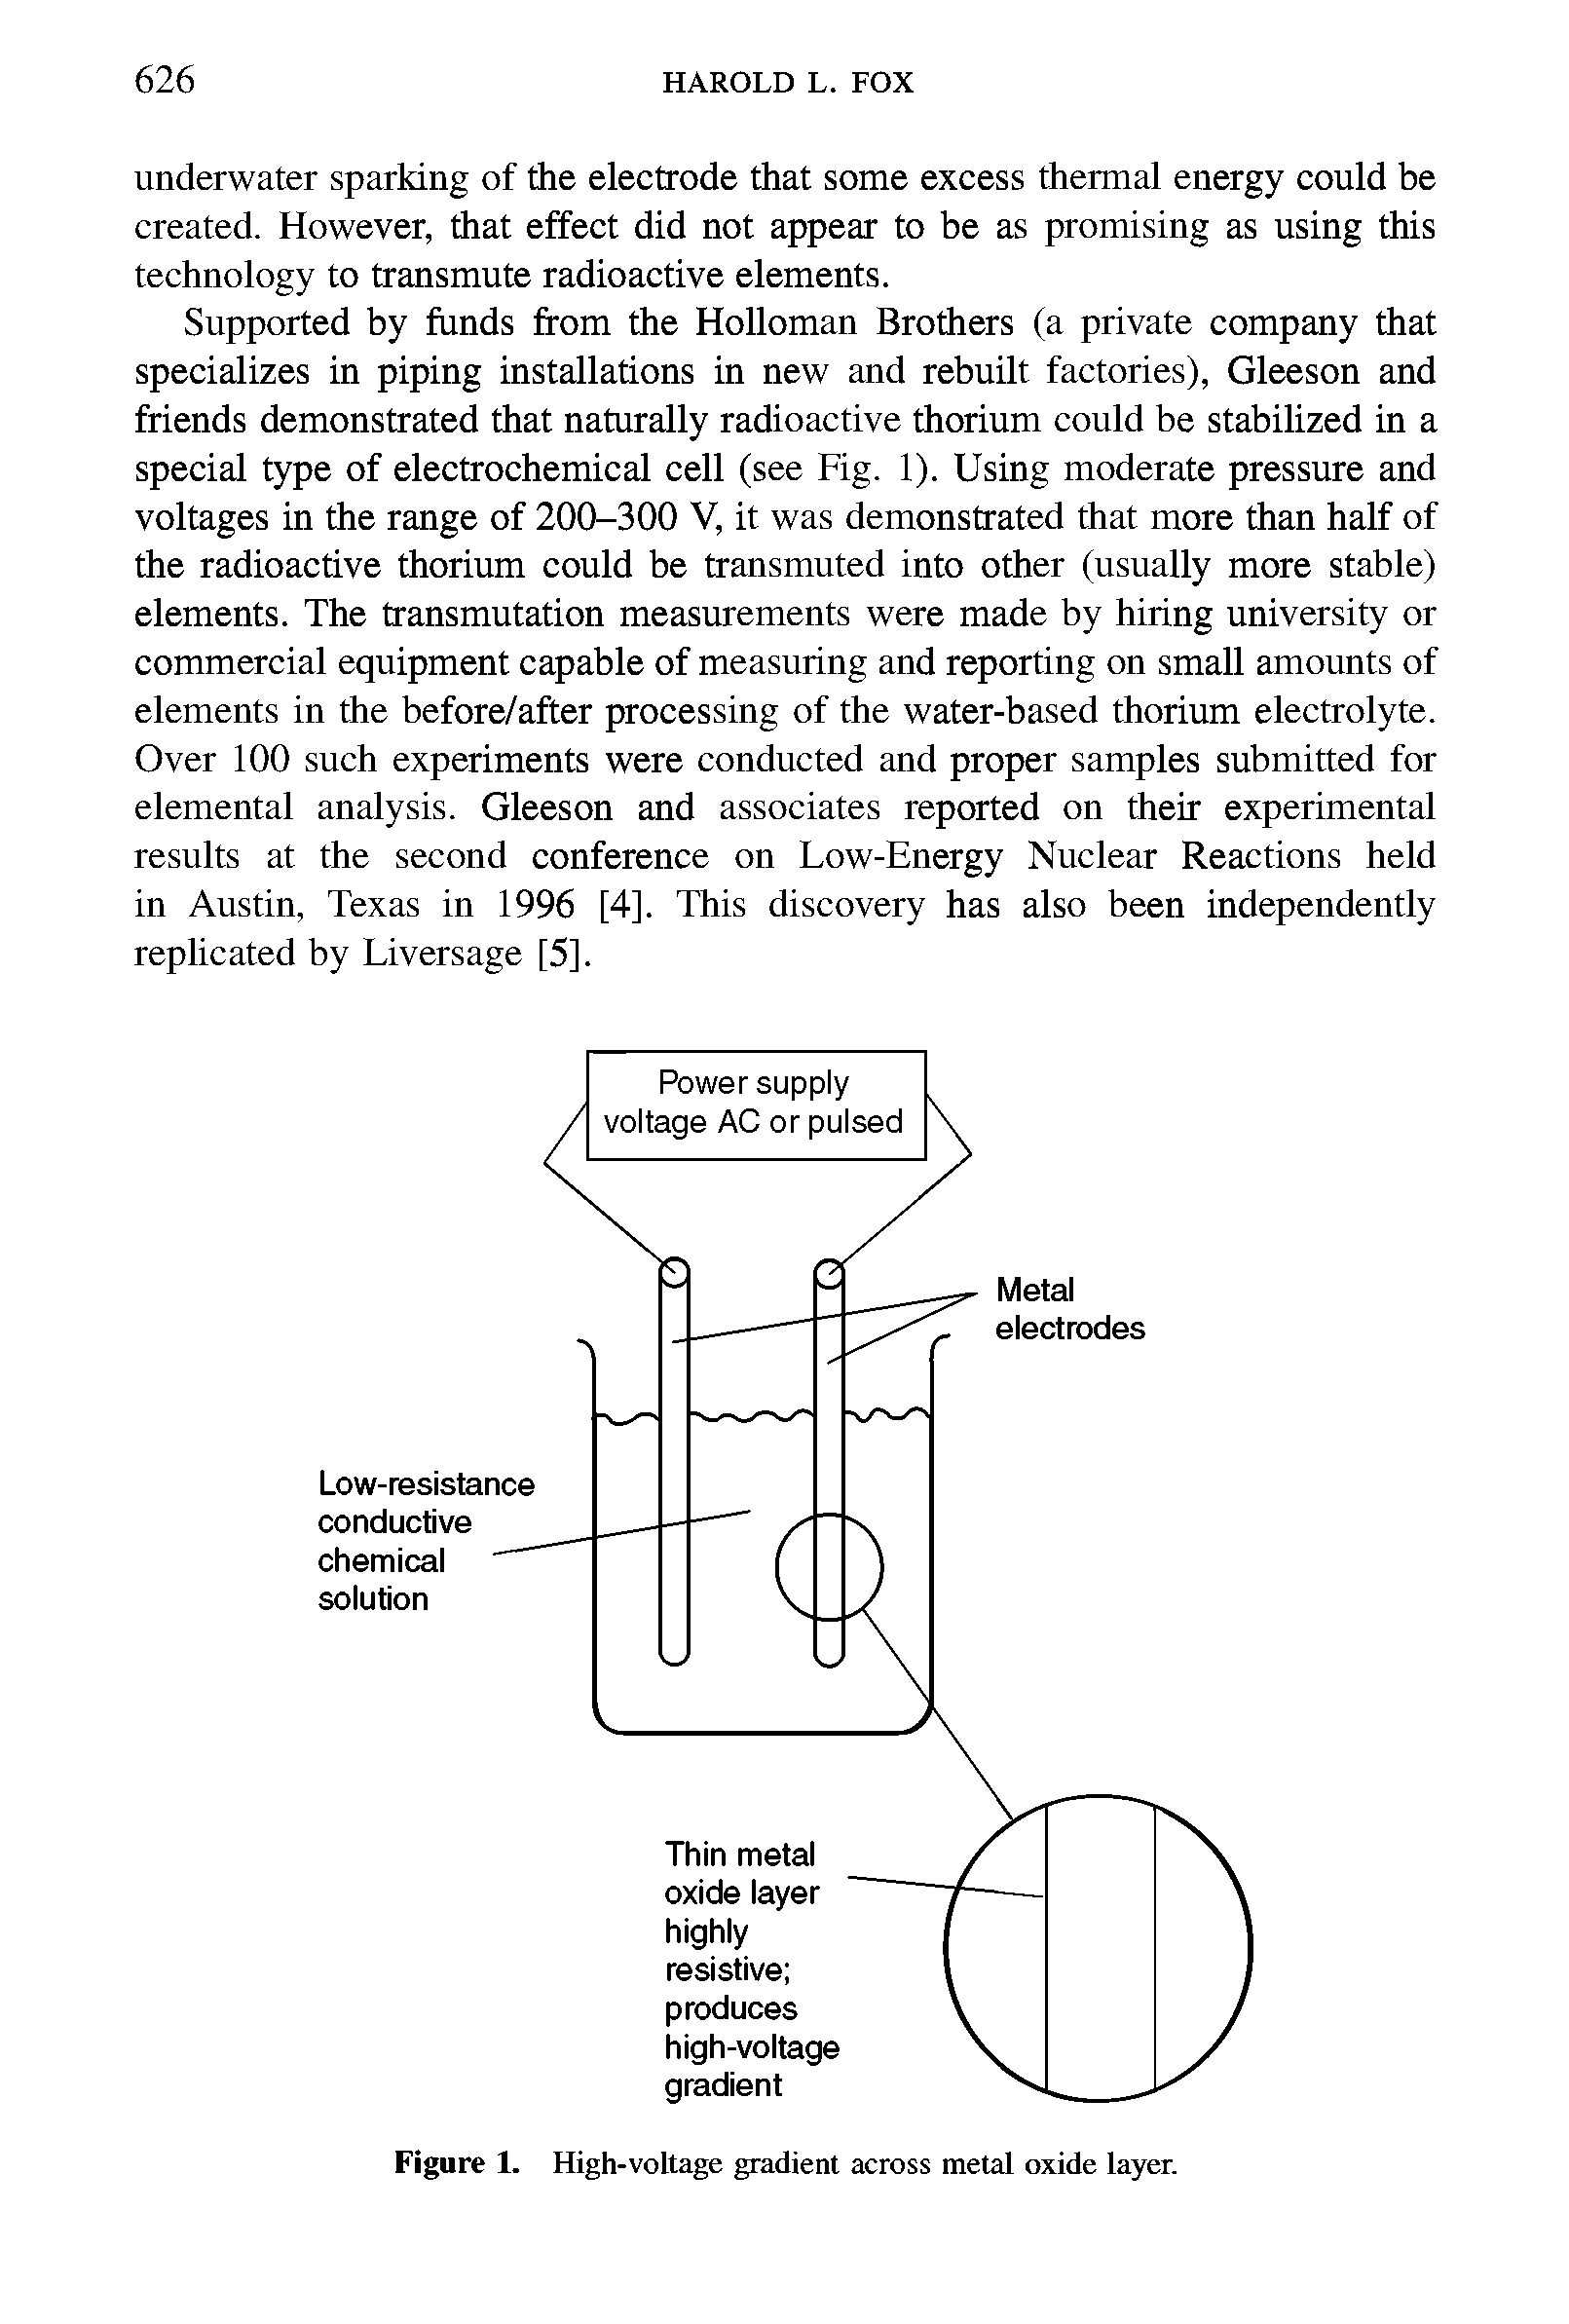 Figure 1. High-voltage gradient across metal oxide layer.